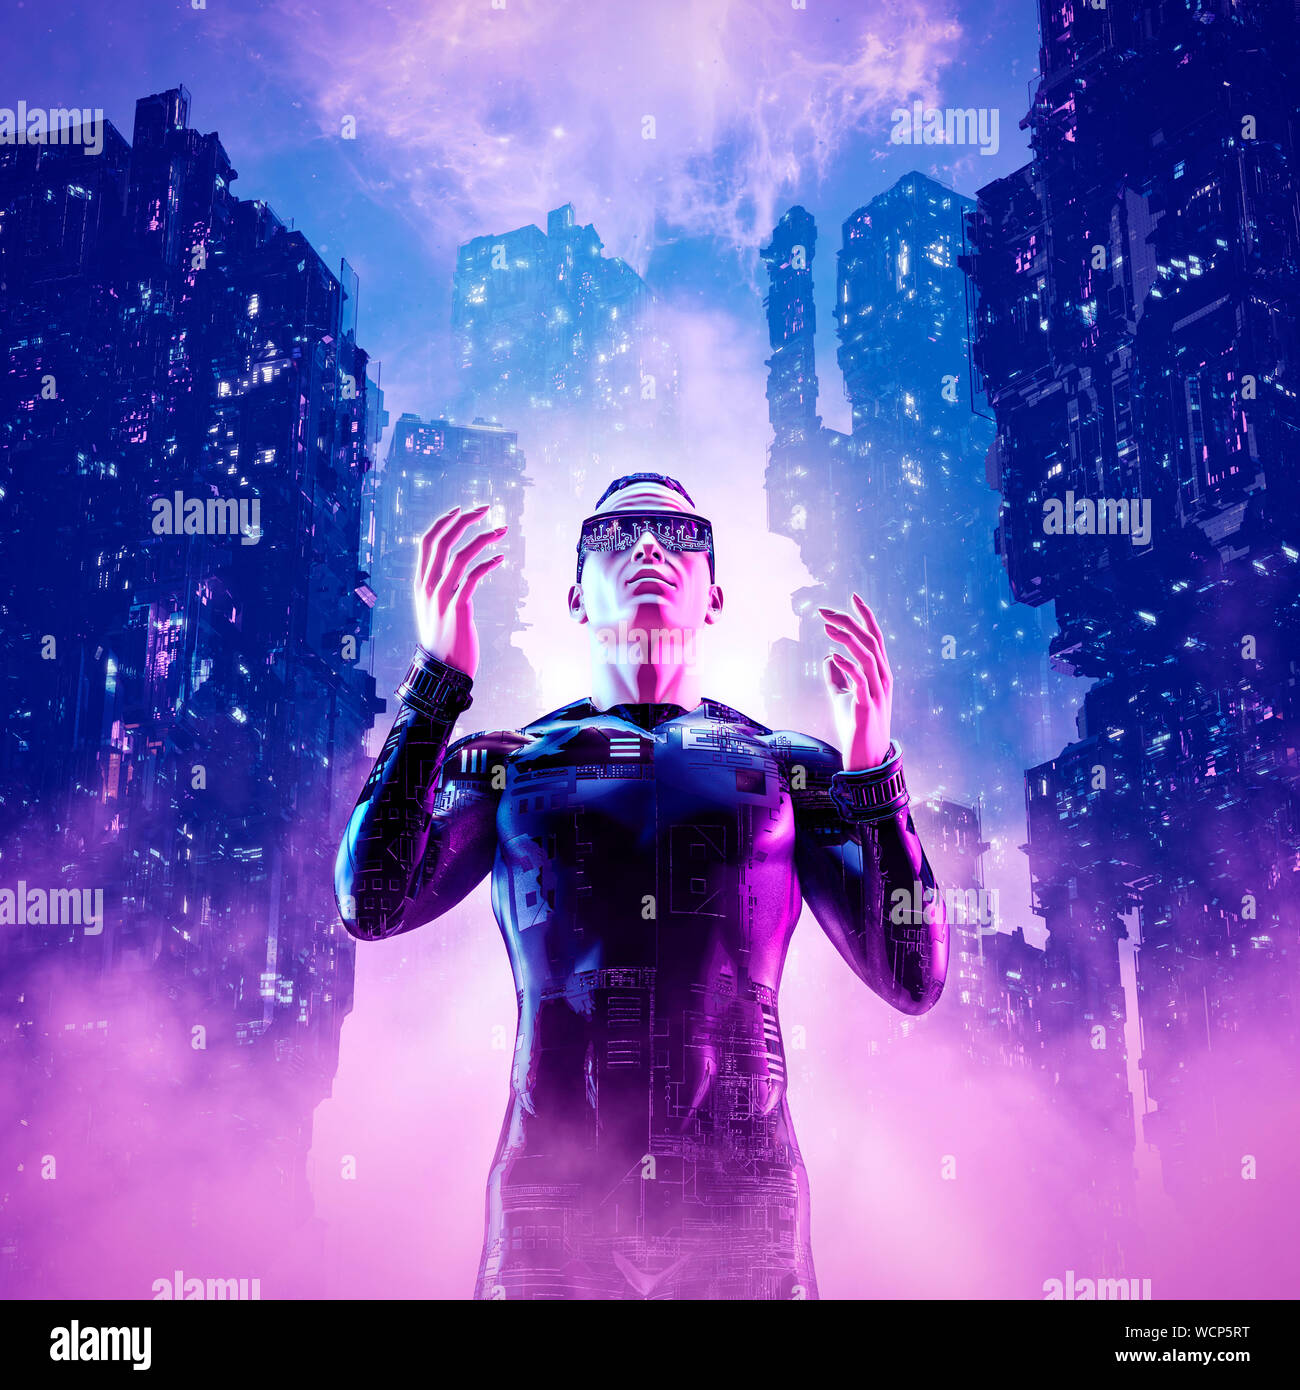 Neon night hero / 3D illustration of man with sunglasses in futuristic neon lit cyberpunk city Stock Photo